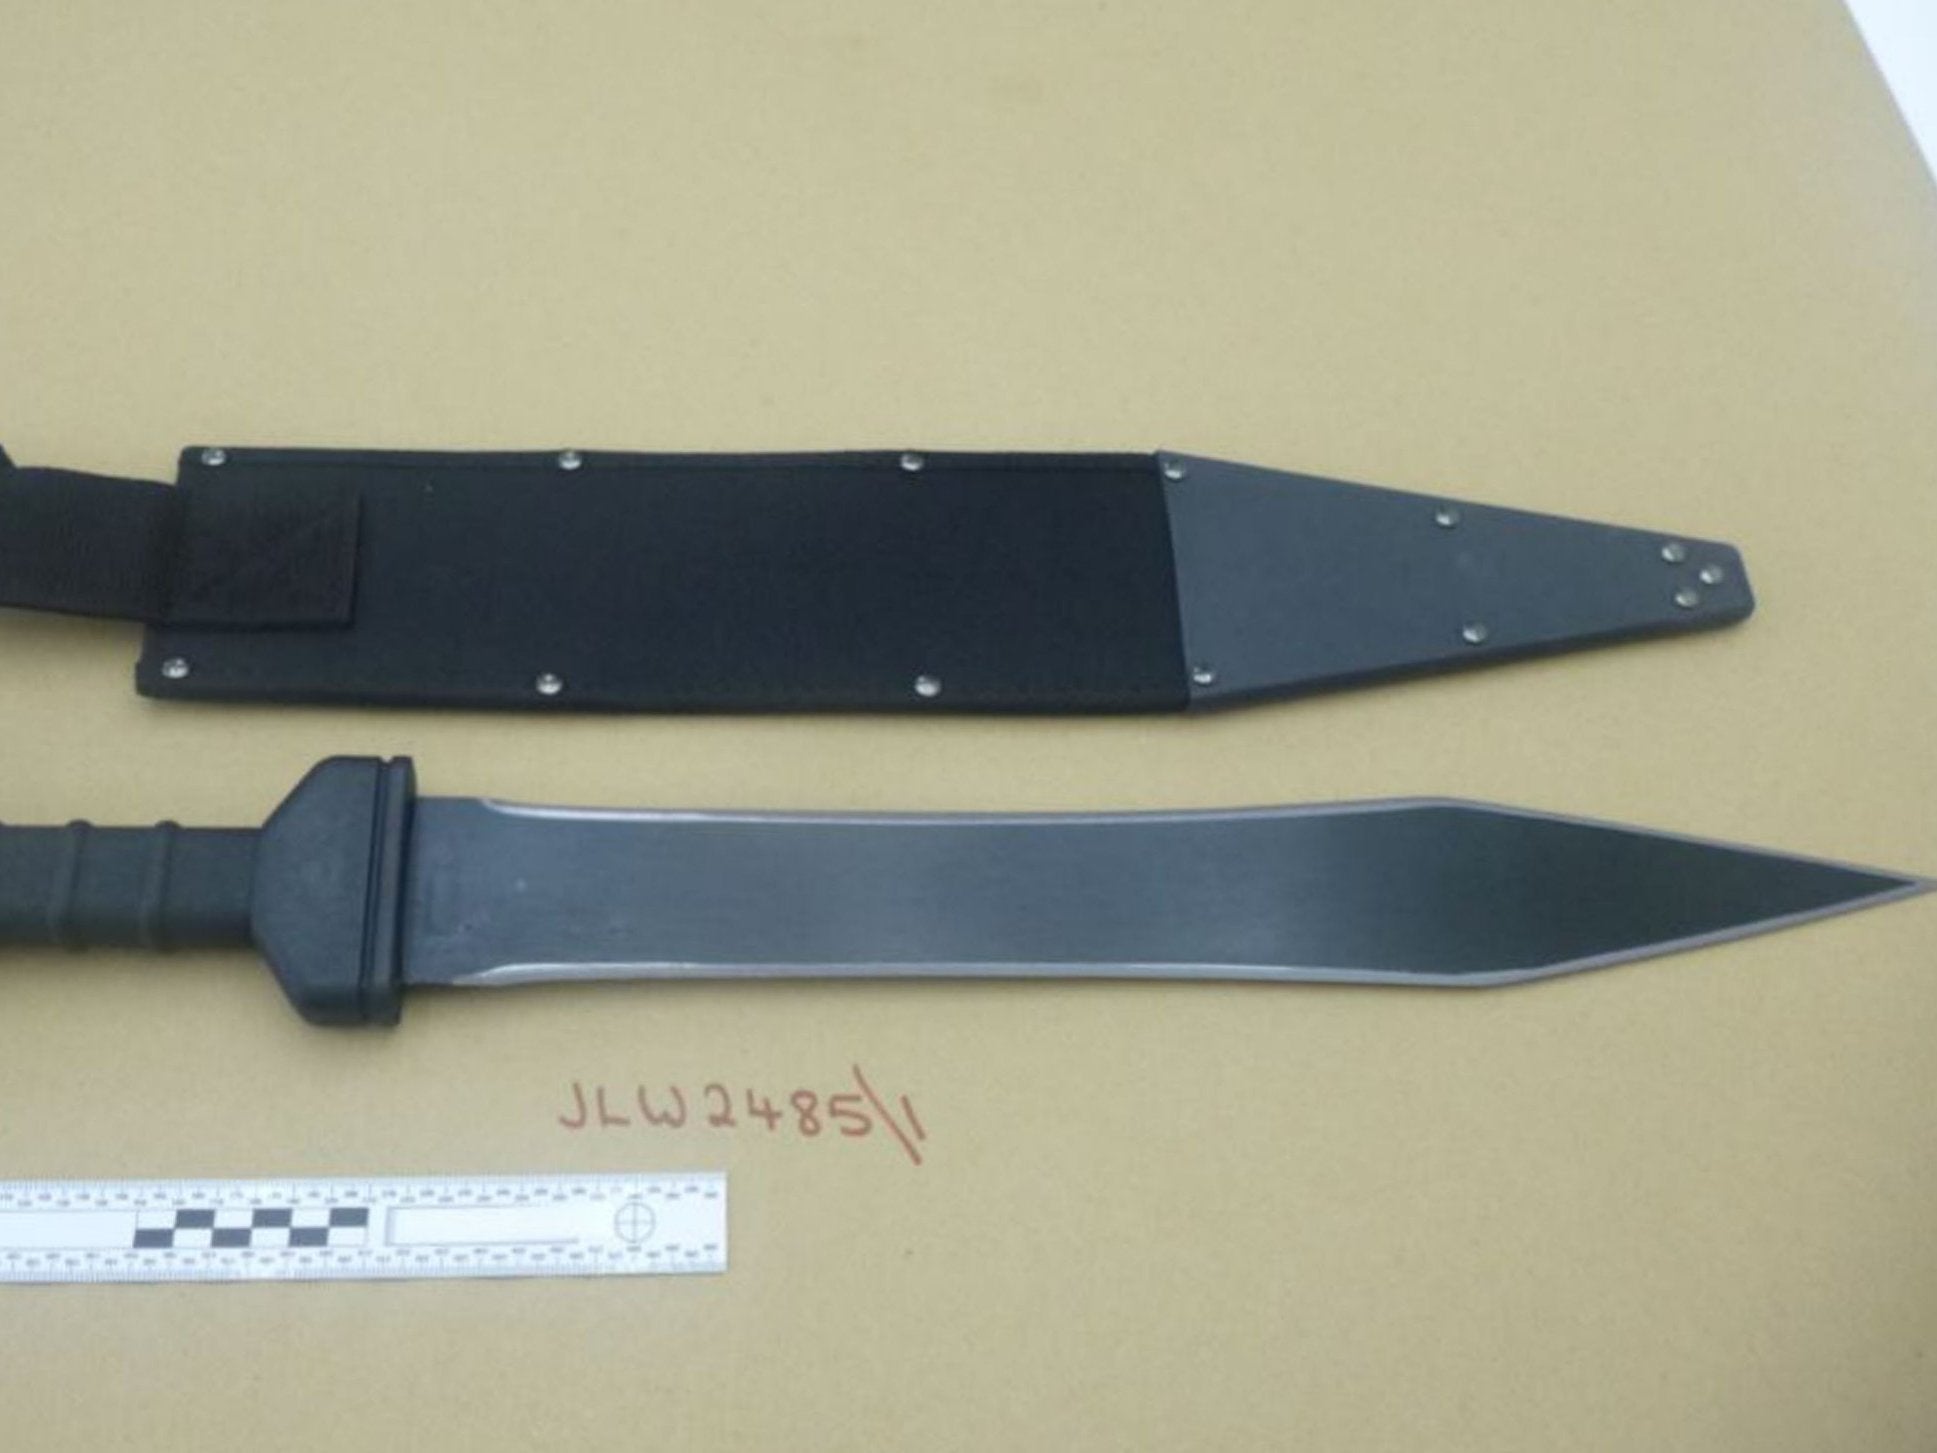 A Gladius machete that Renshaw bought to kill West Lancashire MP Rosie Cooper